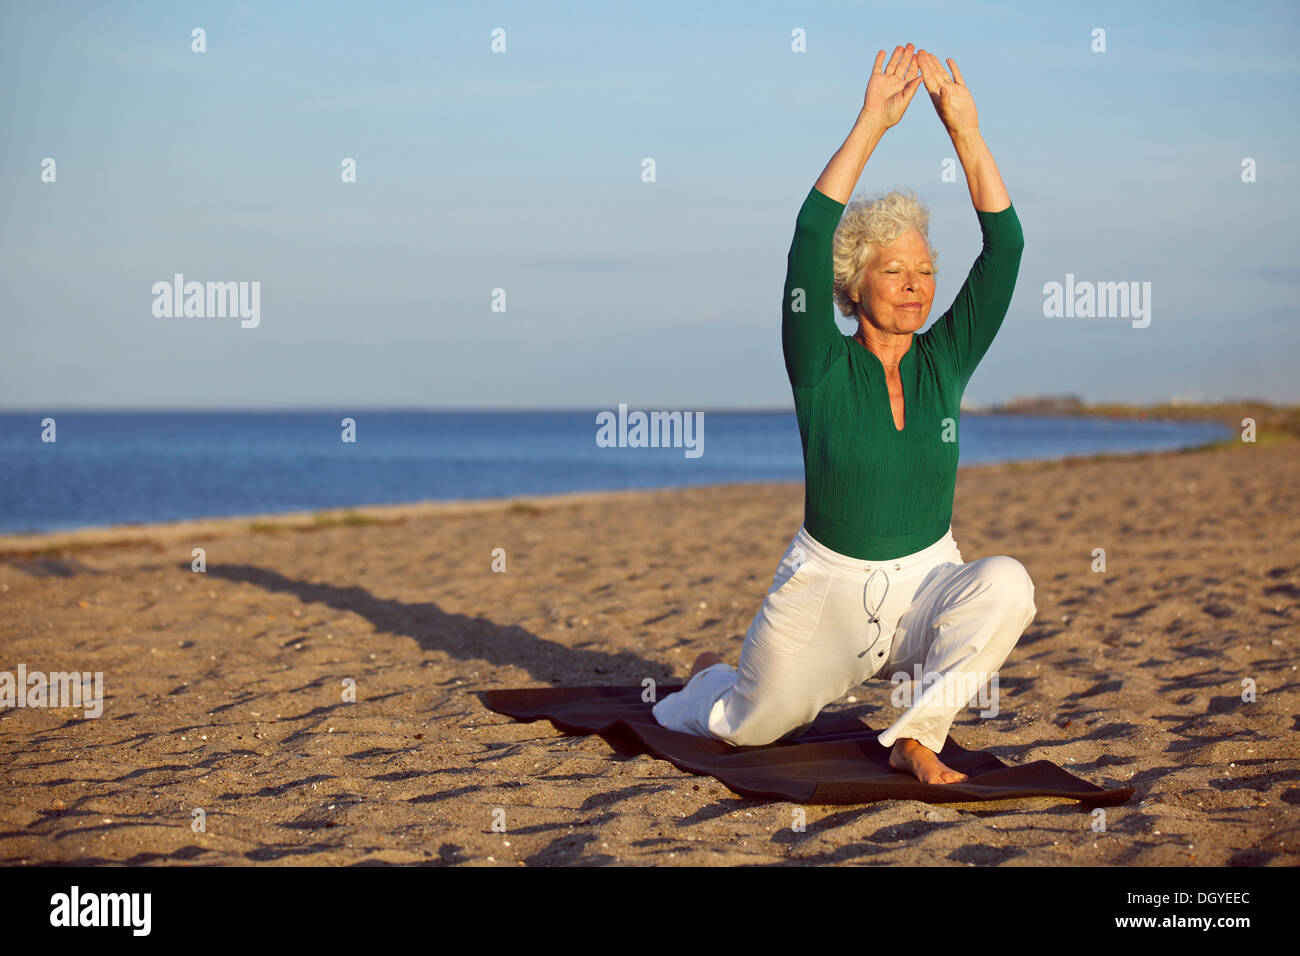 https://c8.alamy.com/comp/DGYEEC/senior-woman-practicing-yoga-poses-on-the-sandy-beach-elder-caucasian-DGYEEC.jpg